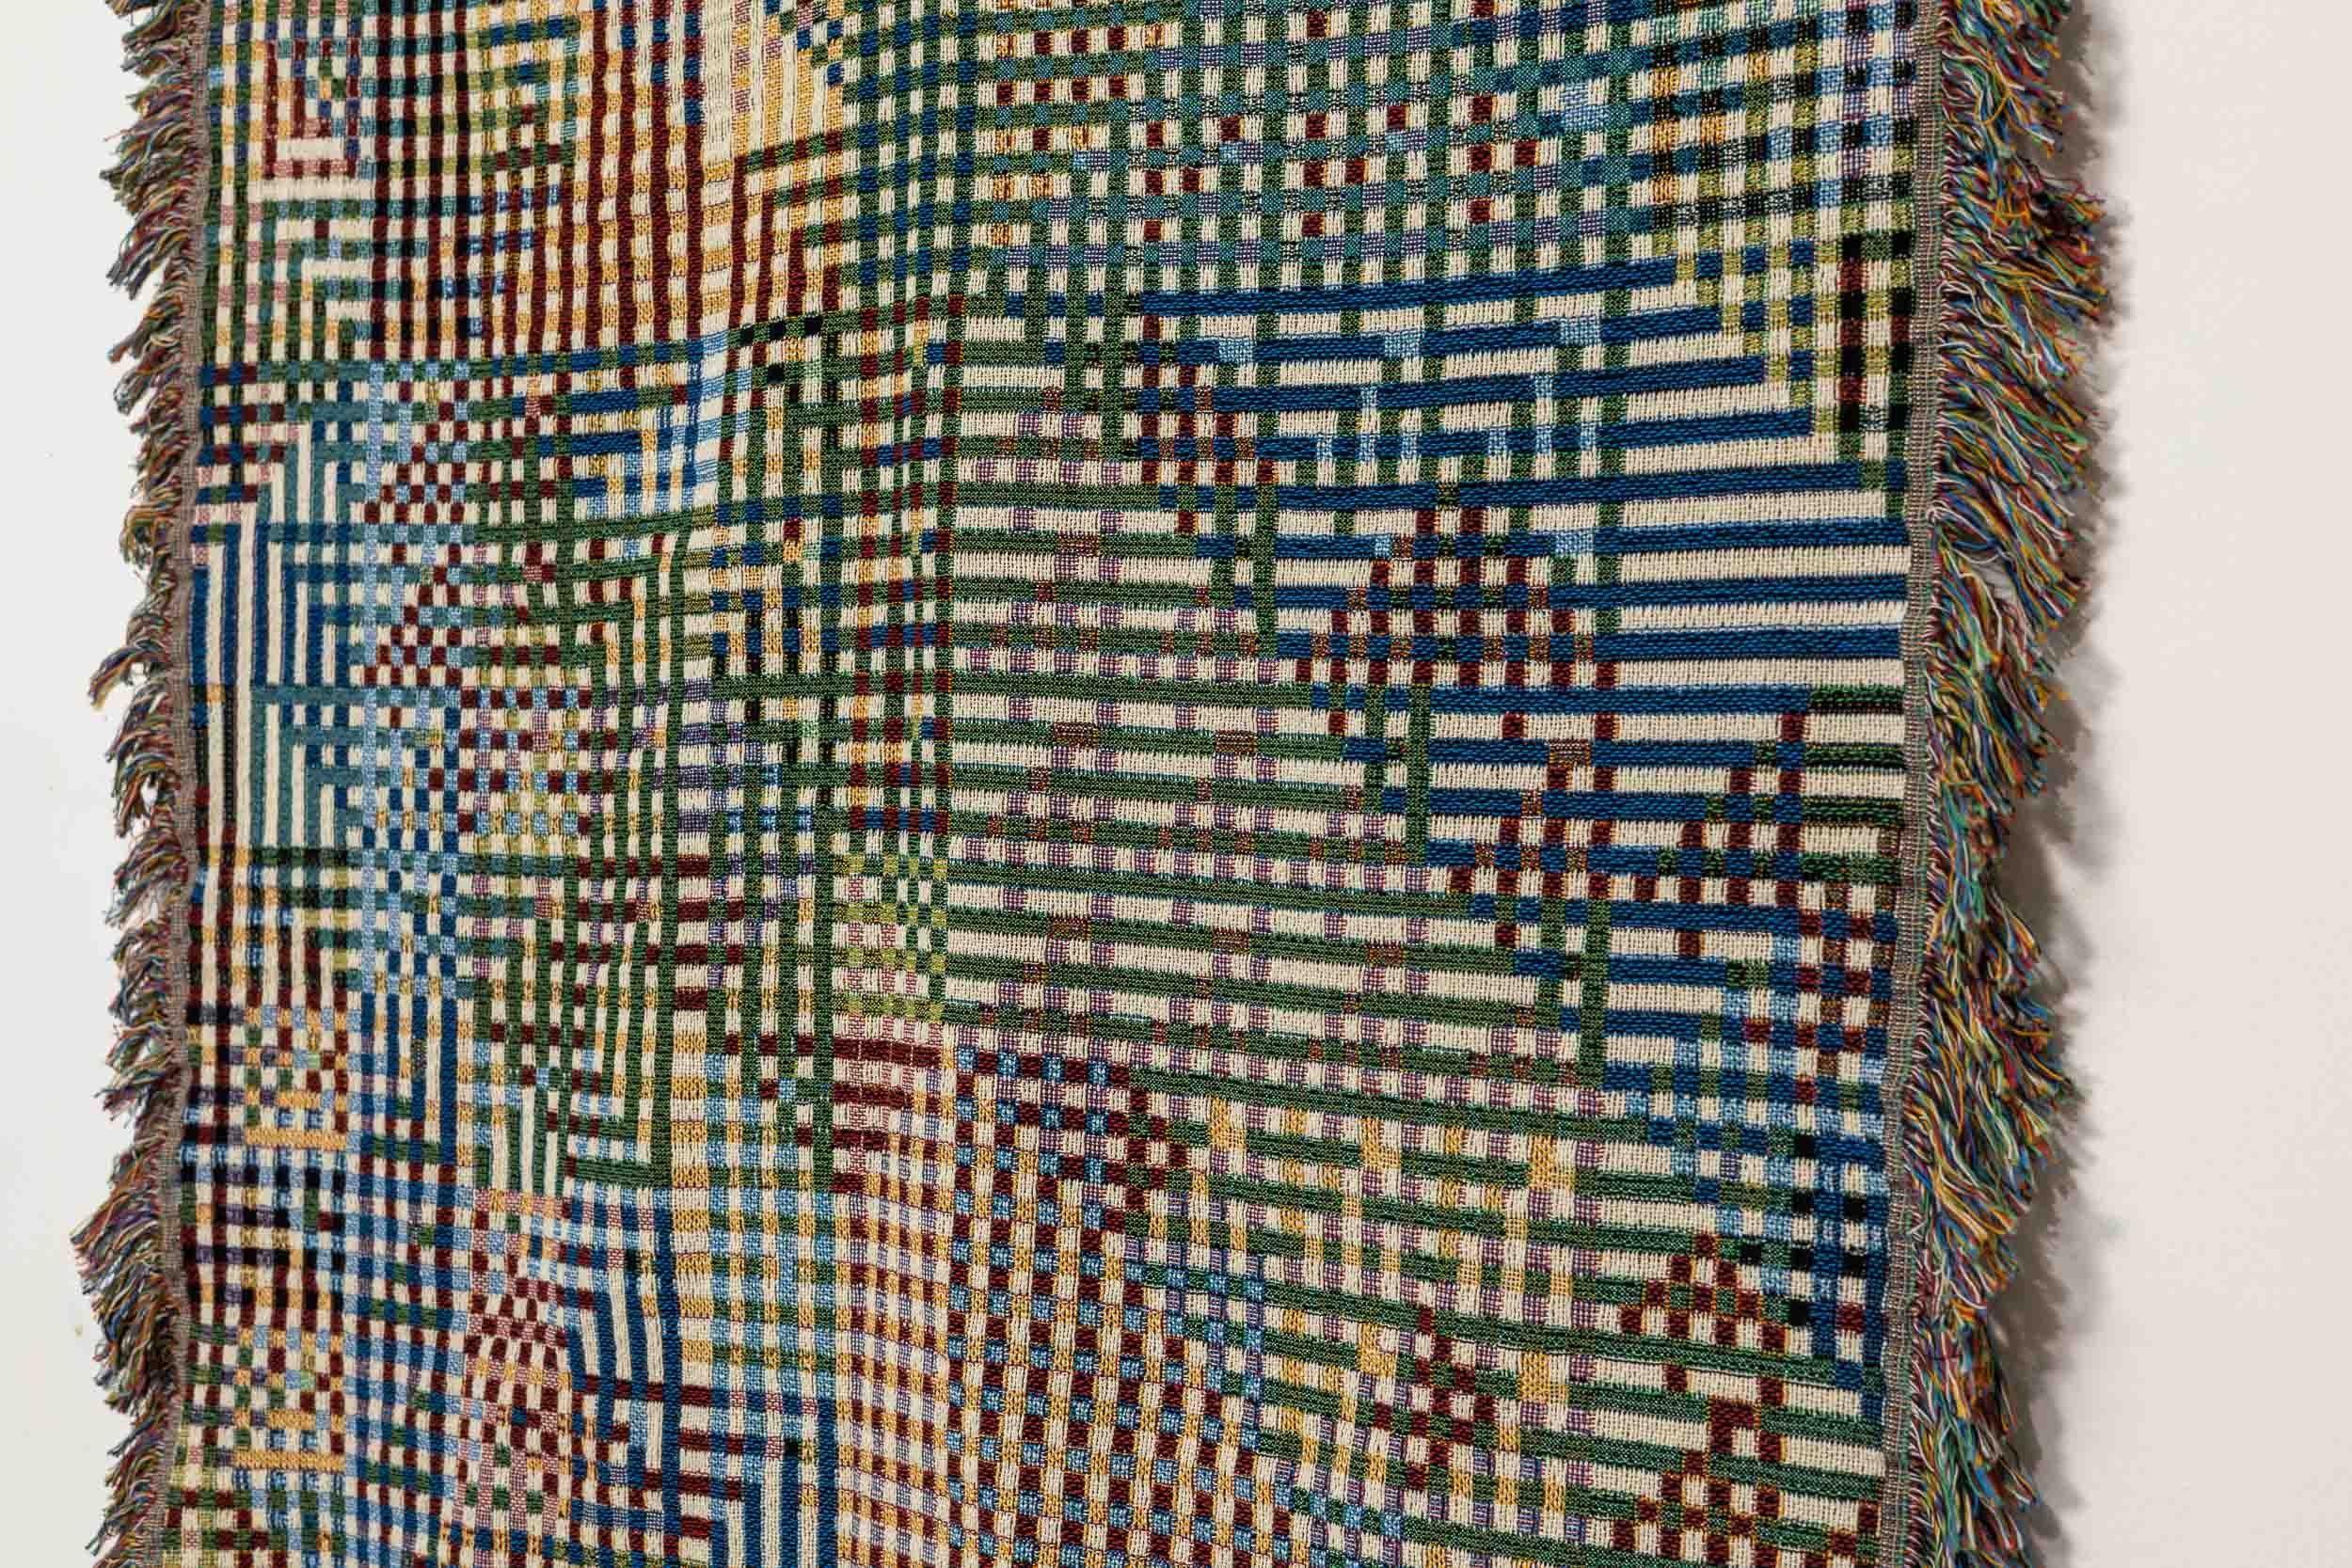 Bit Map Throw Blanket 03, 100% Baumwolle Woven Contemporary Pixel Art, 60 